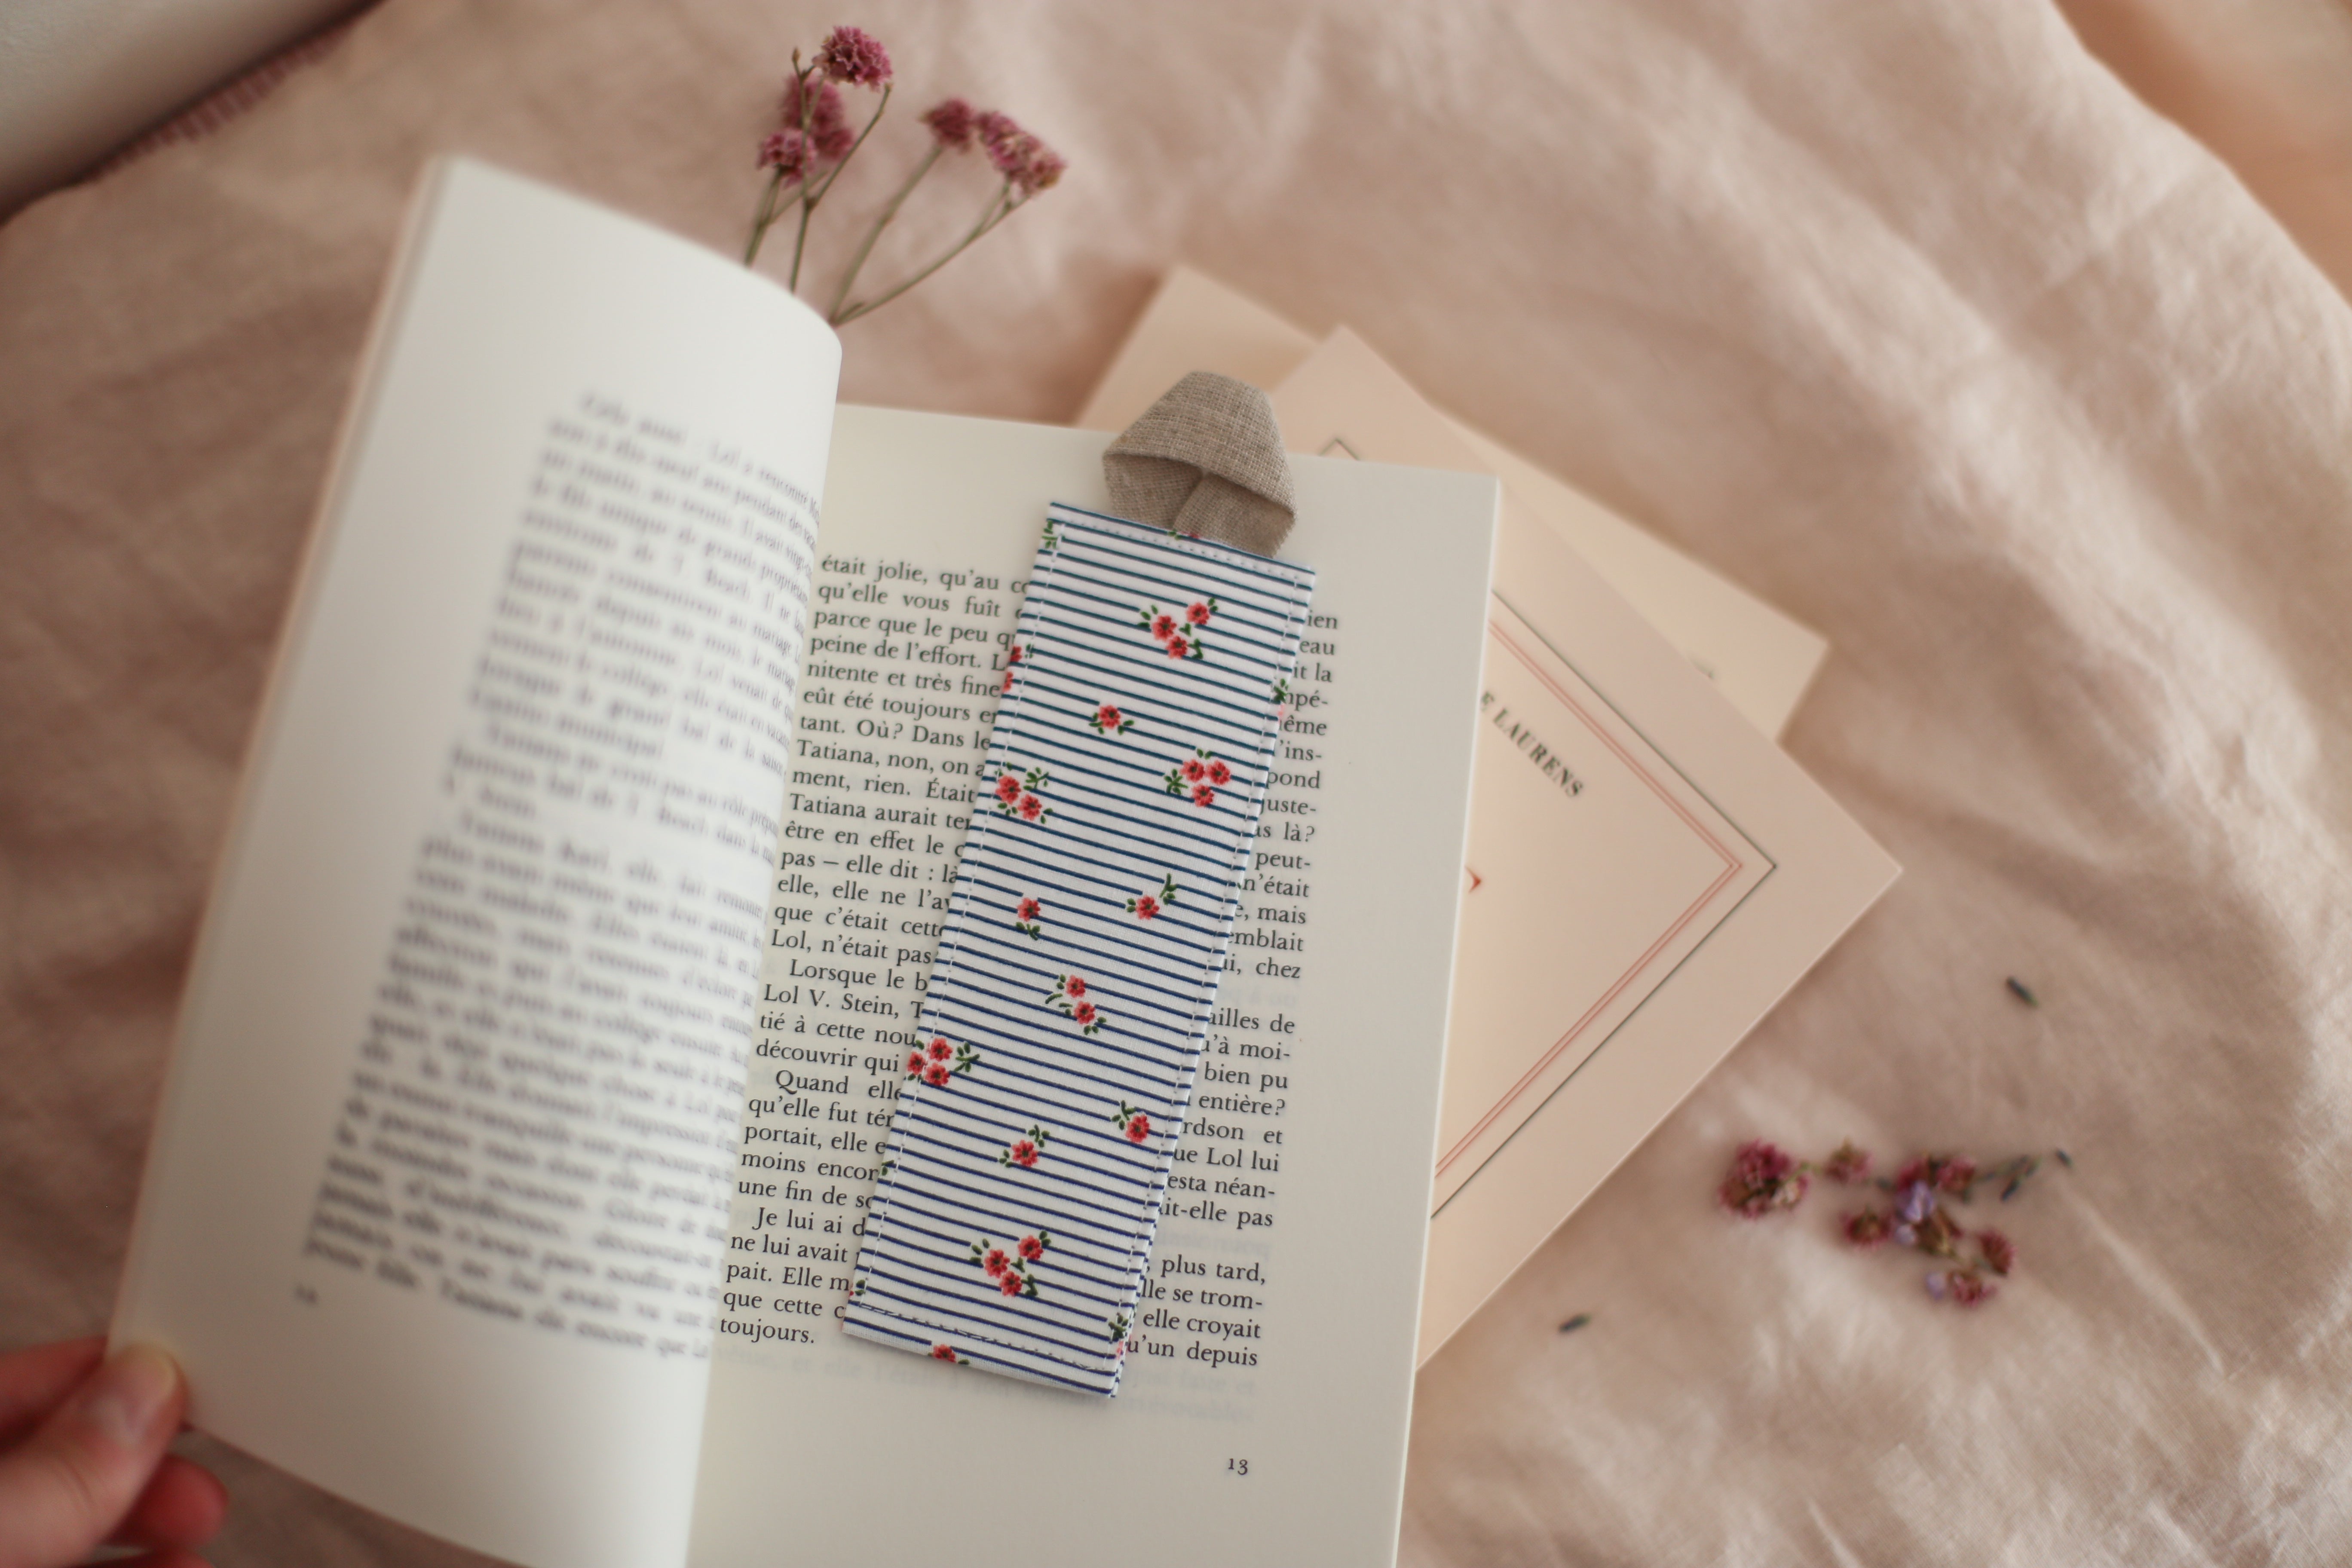 Bookmark "On the side of Swan de Marcel Proust"